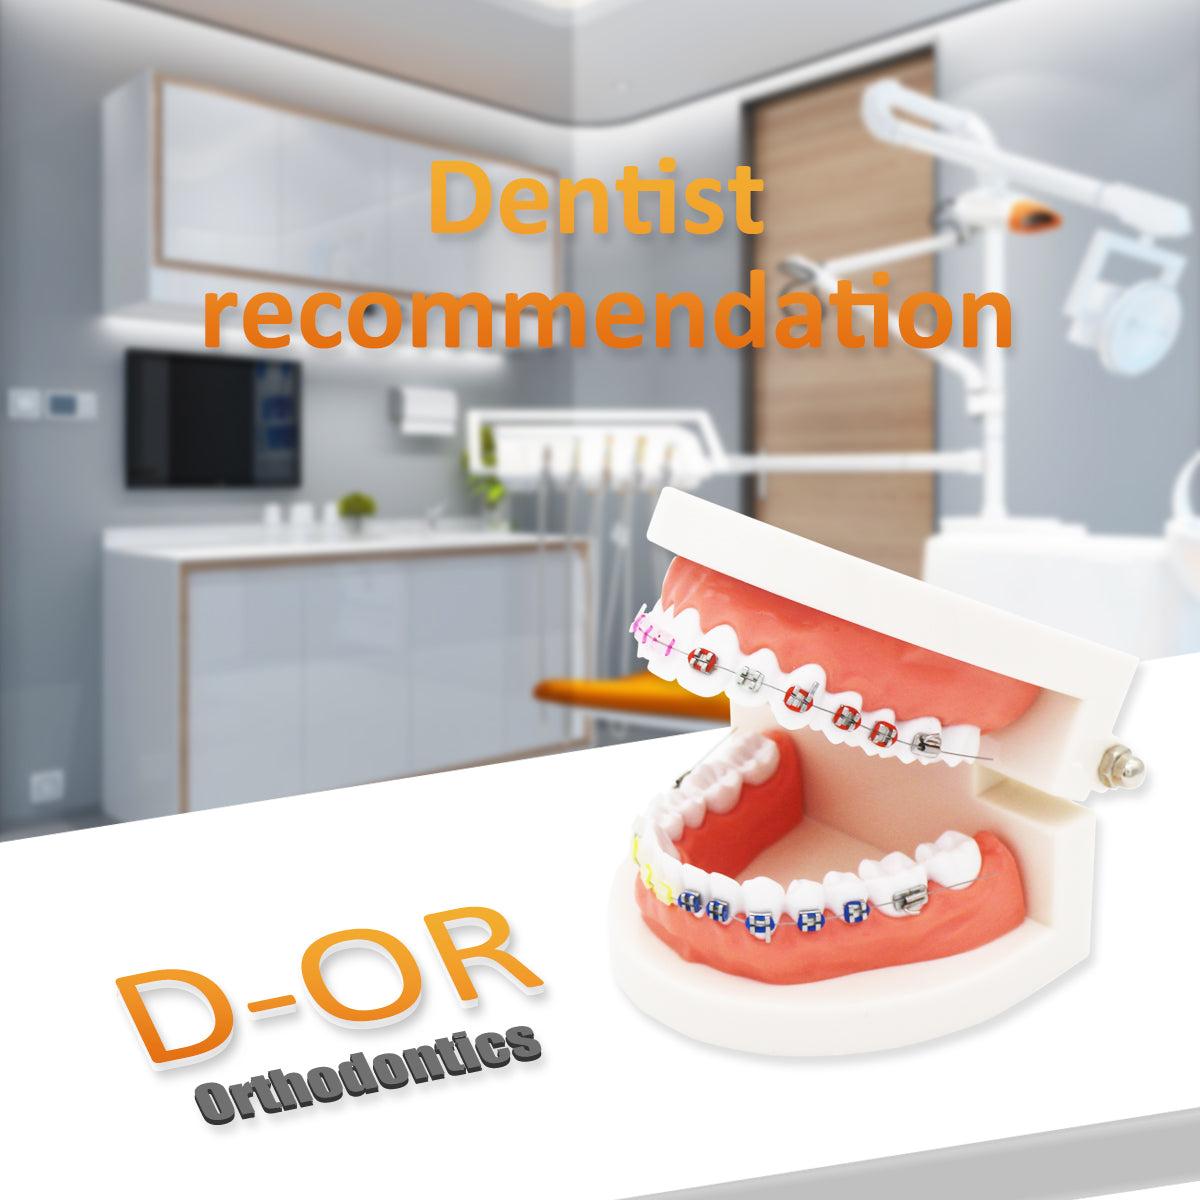 Dental Teeth Model,Transparent Dental Implant Teeth Model Dentist Standard Disease Removable Tooth Pathological Teaching Model  （D-OR）